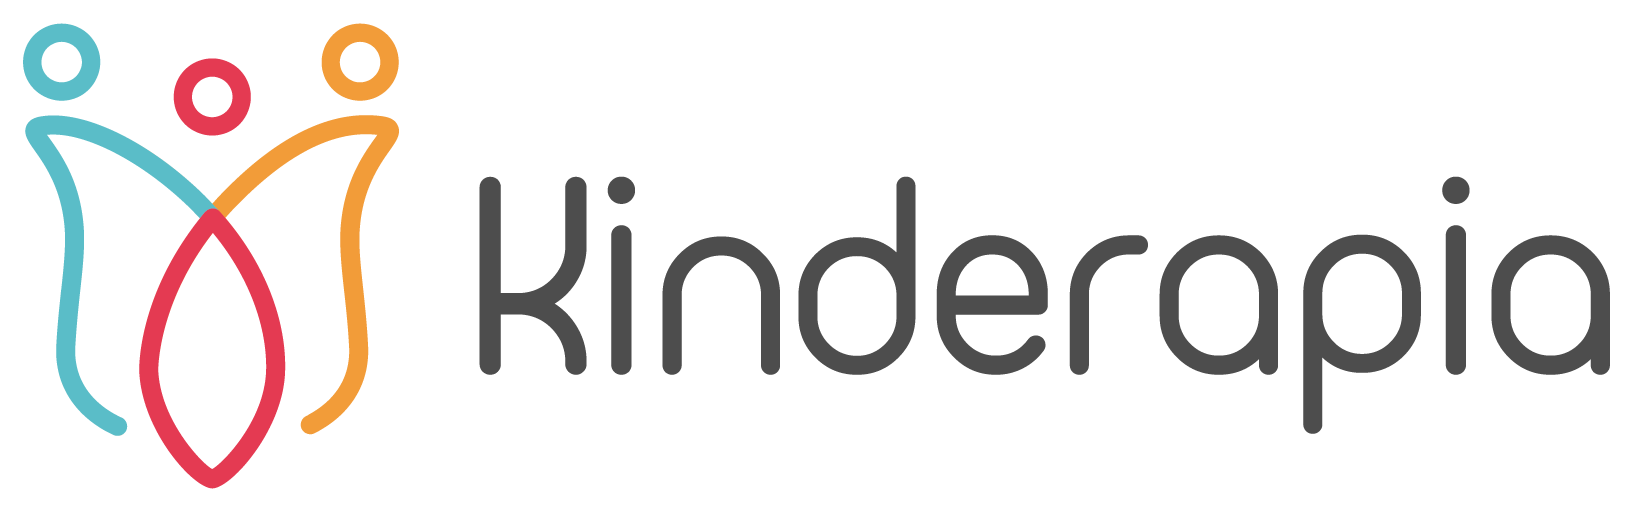 Logo Kinderapia